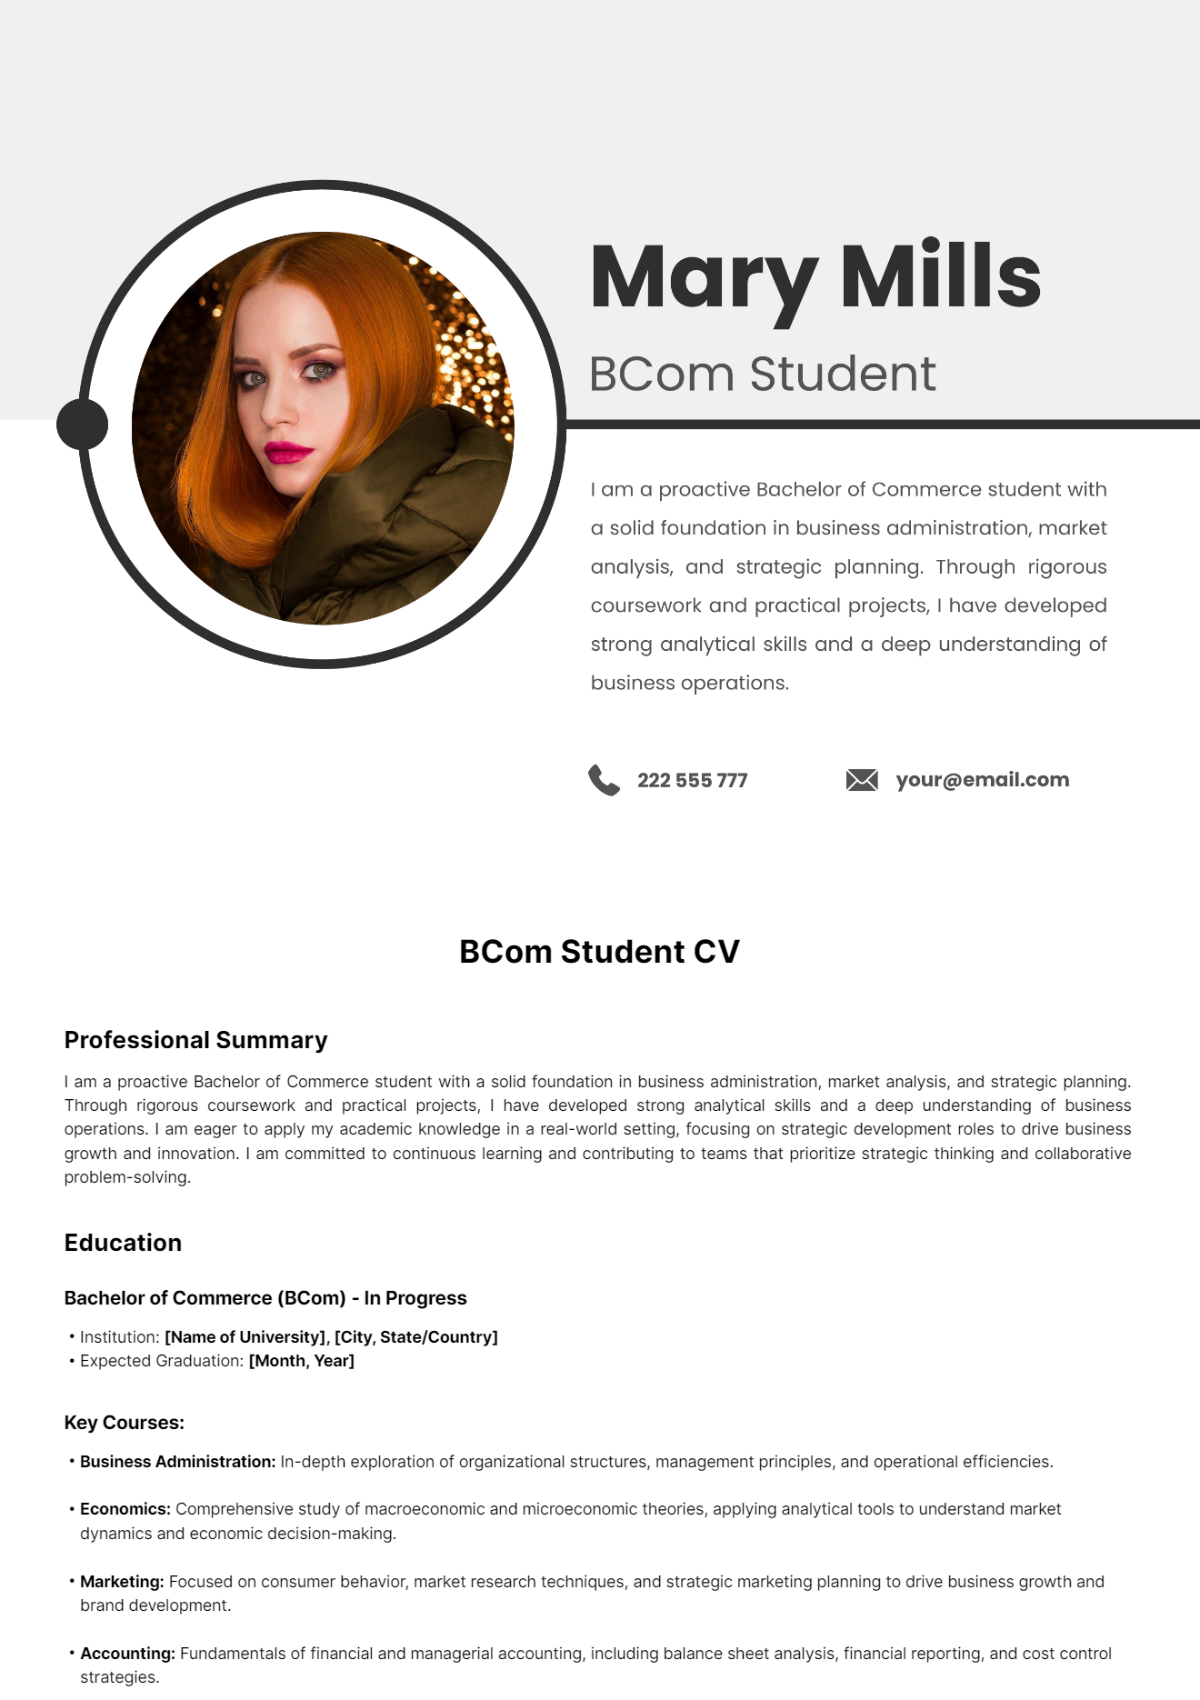 BCom Student CV Template